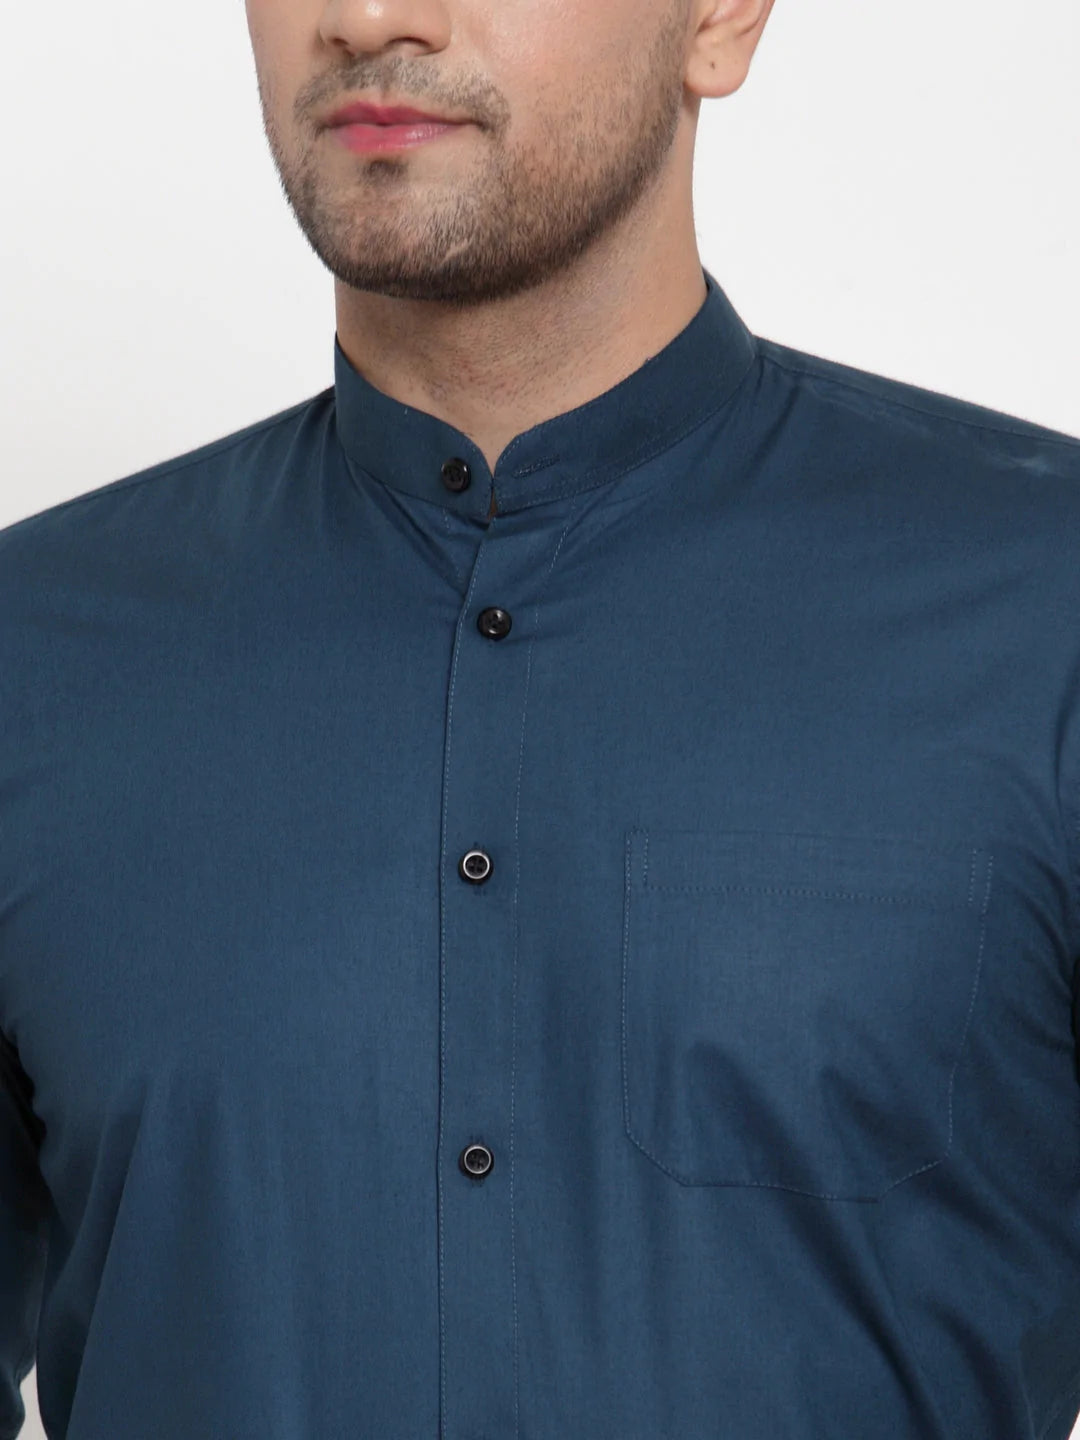 Jainish Navy Men's Cotton Solid Mandarin Collar Formal Shirts ( SF 726Teal )